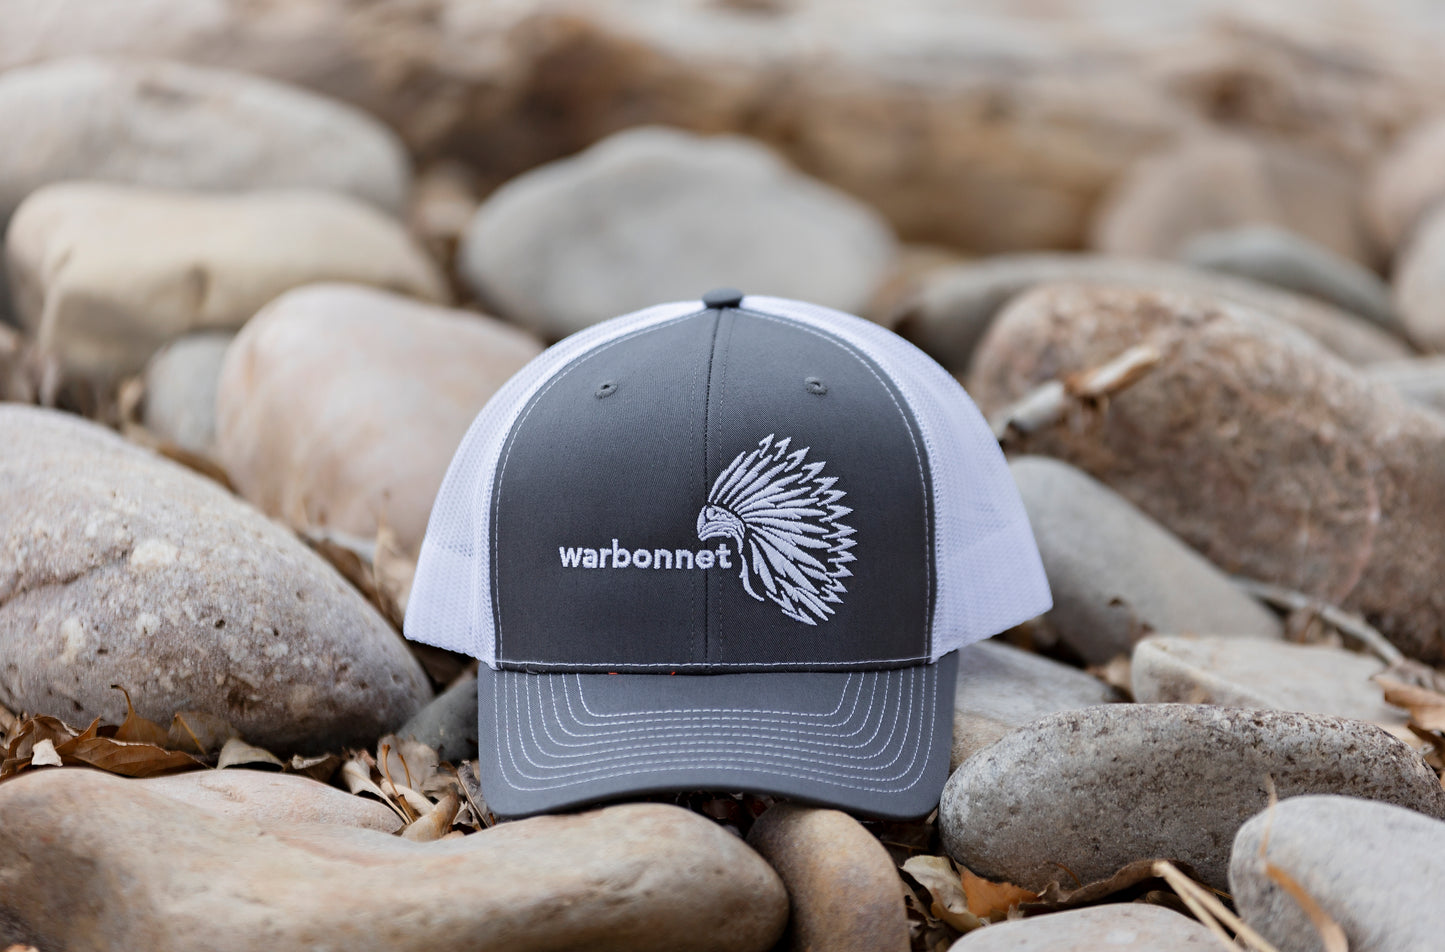 warbonnet trucker hat - Charcoal / White